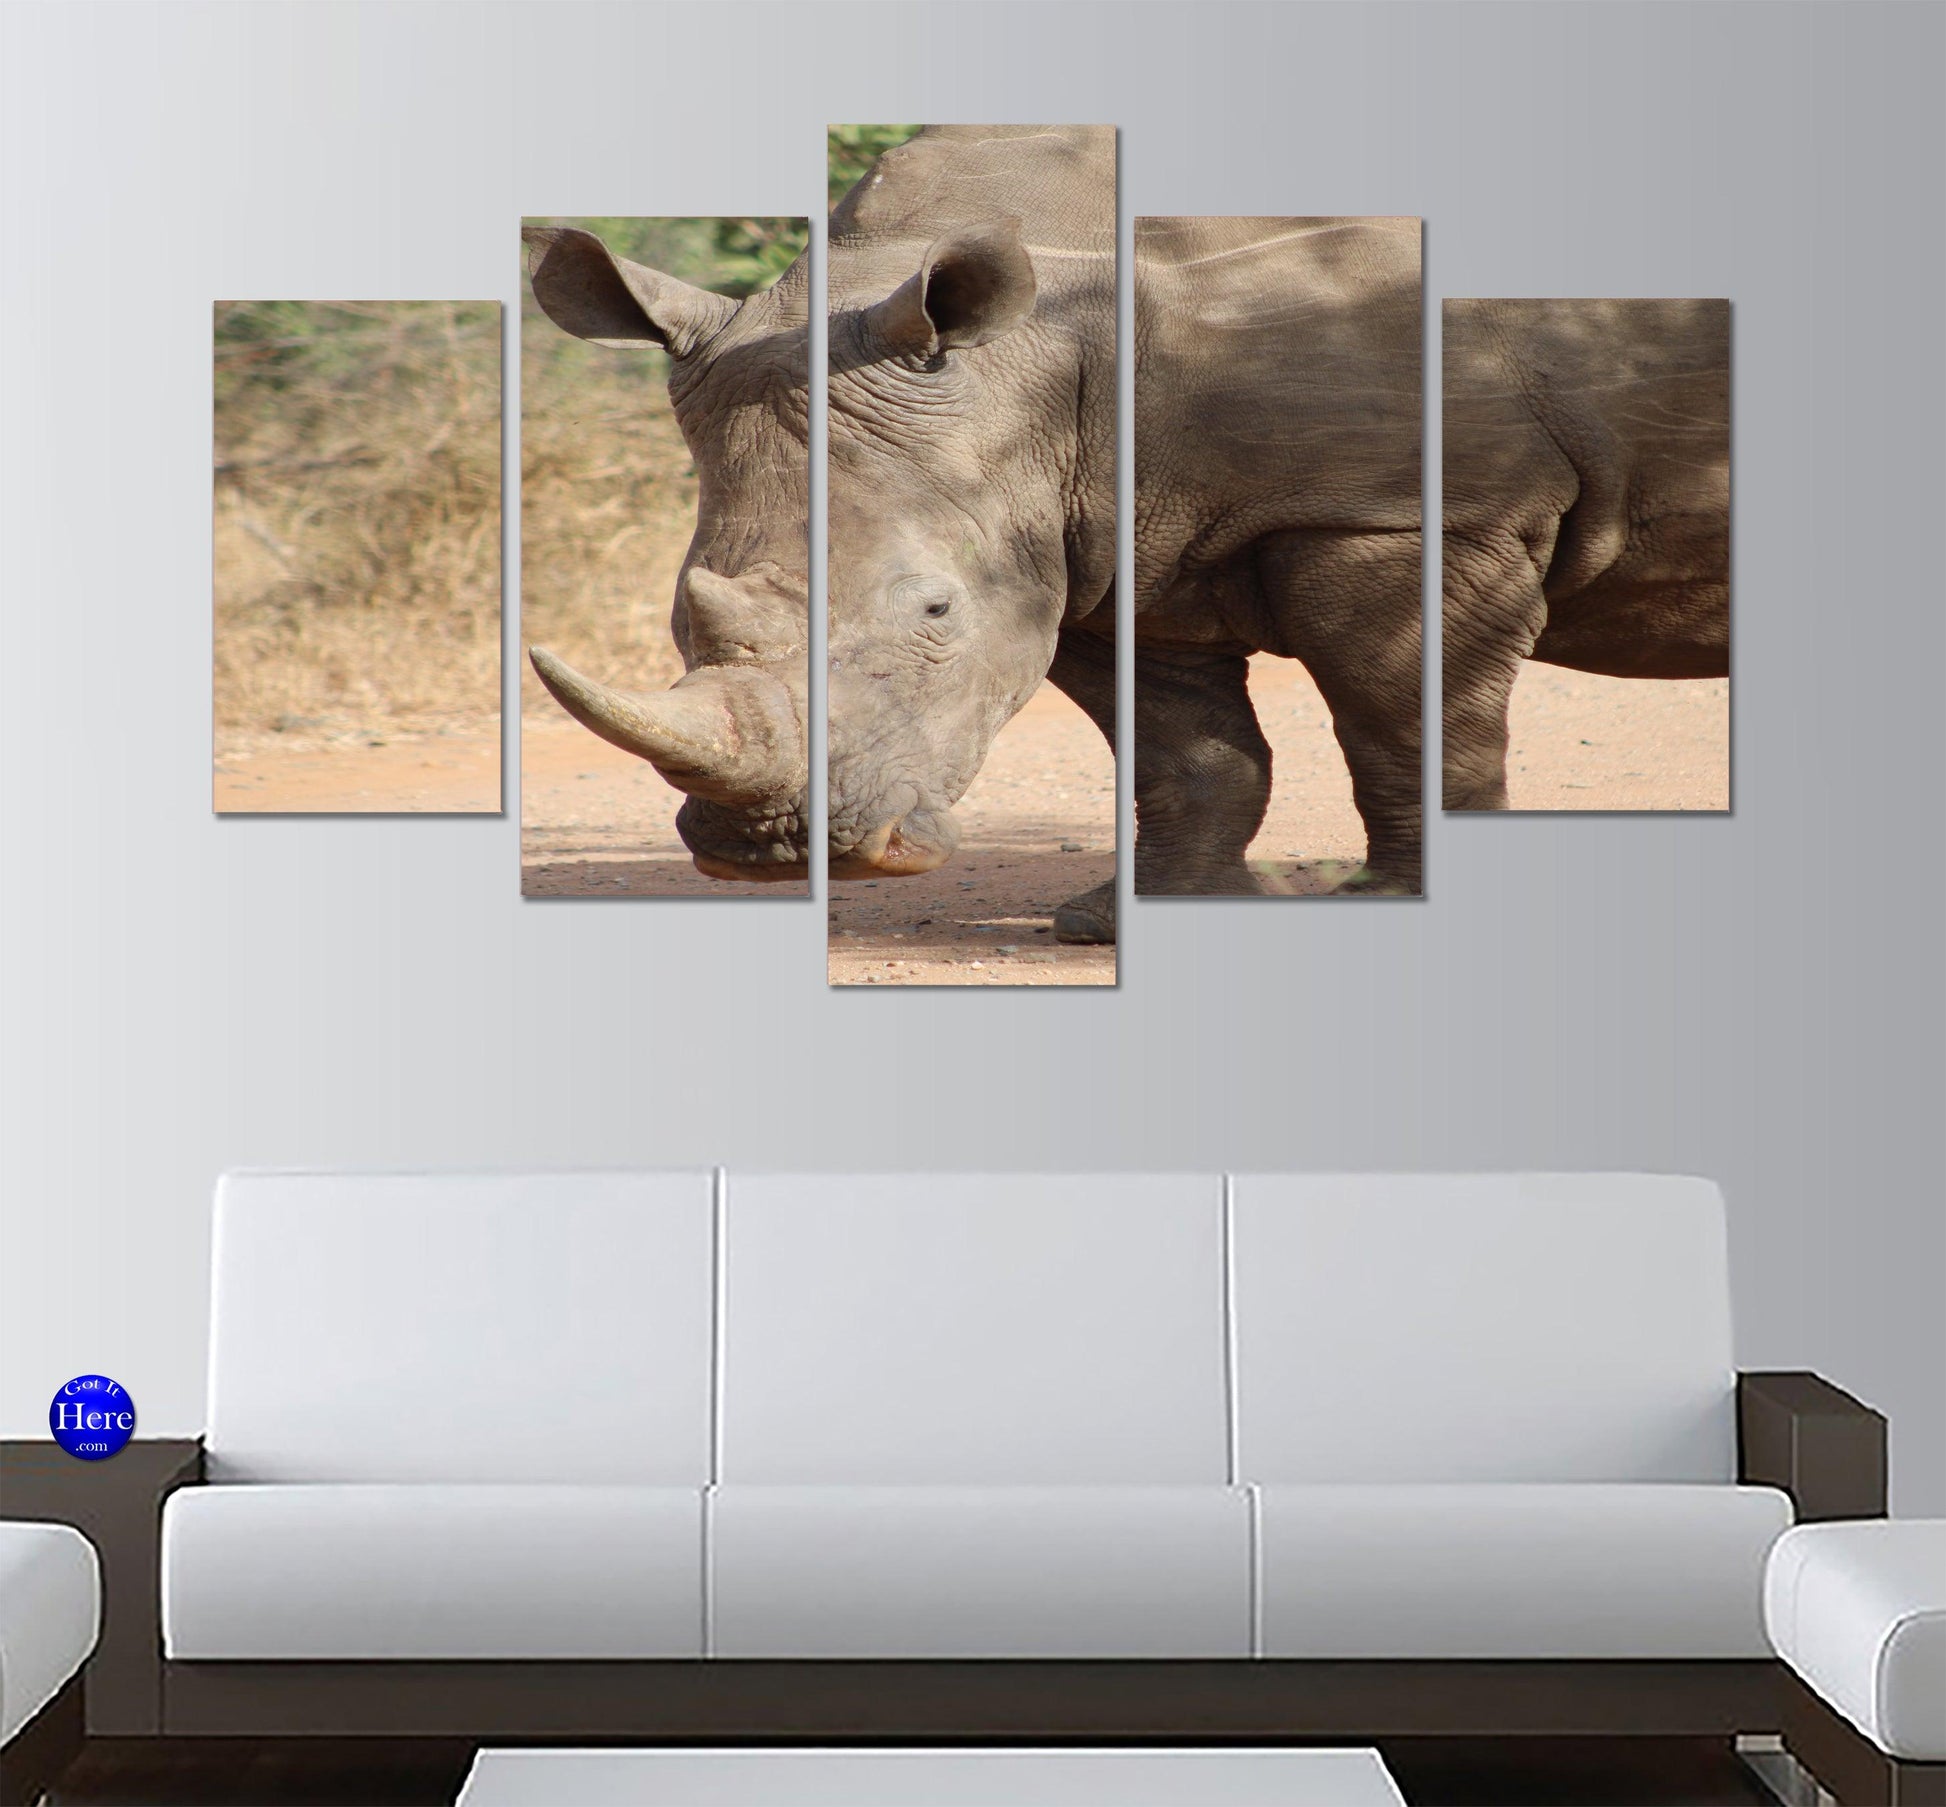 Rhino In The Wild 5 Panel Canvas Print Wall Art - GotItHere.com